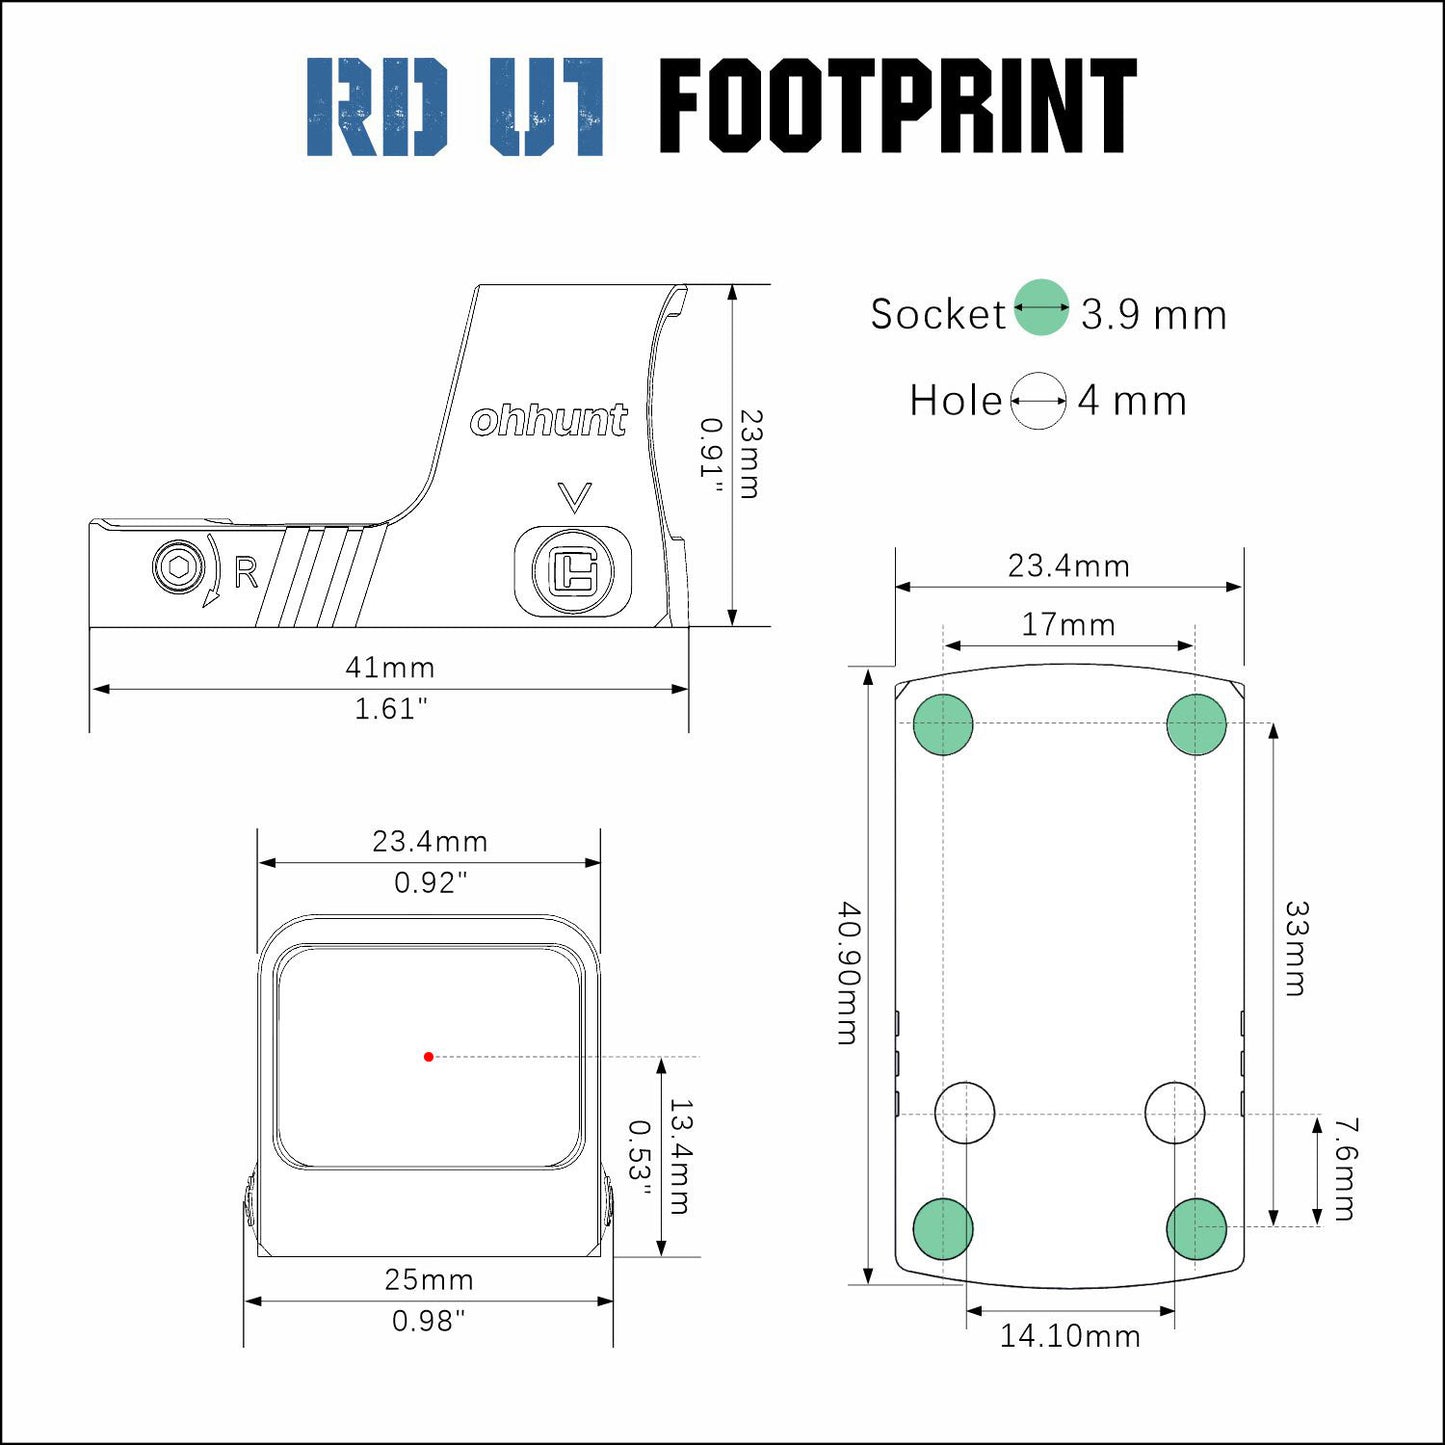 RMSc footprint dimensions